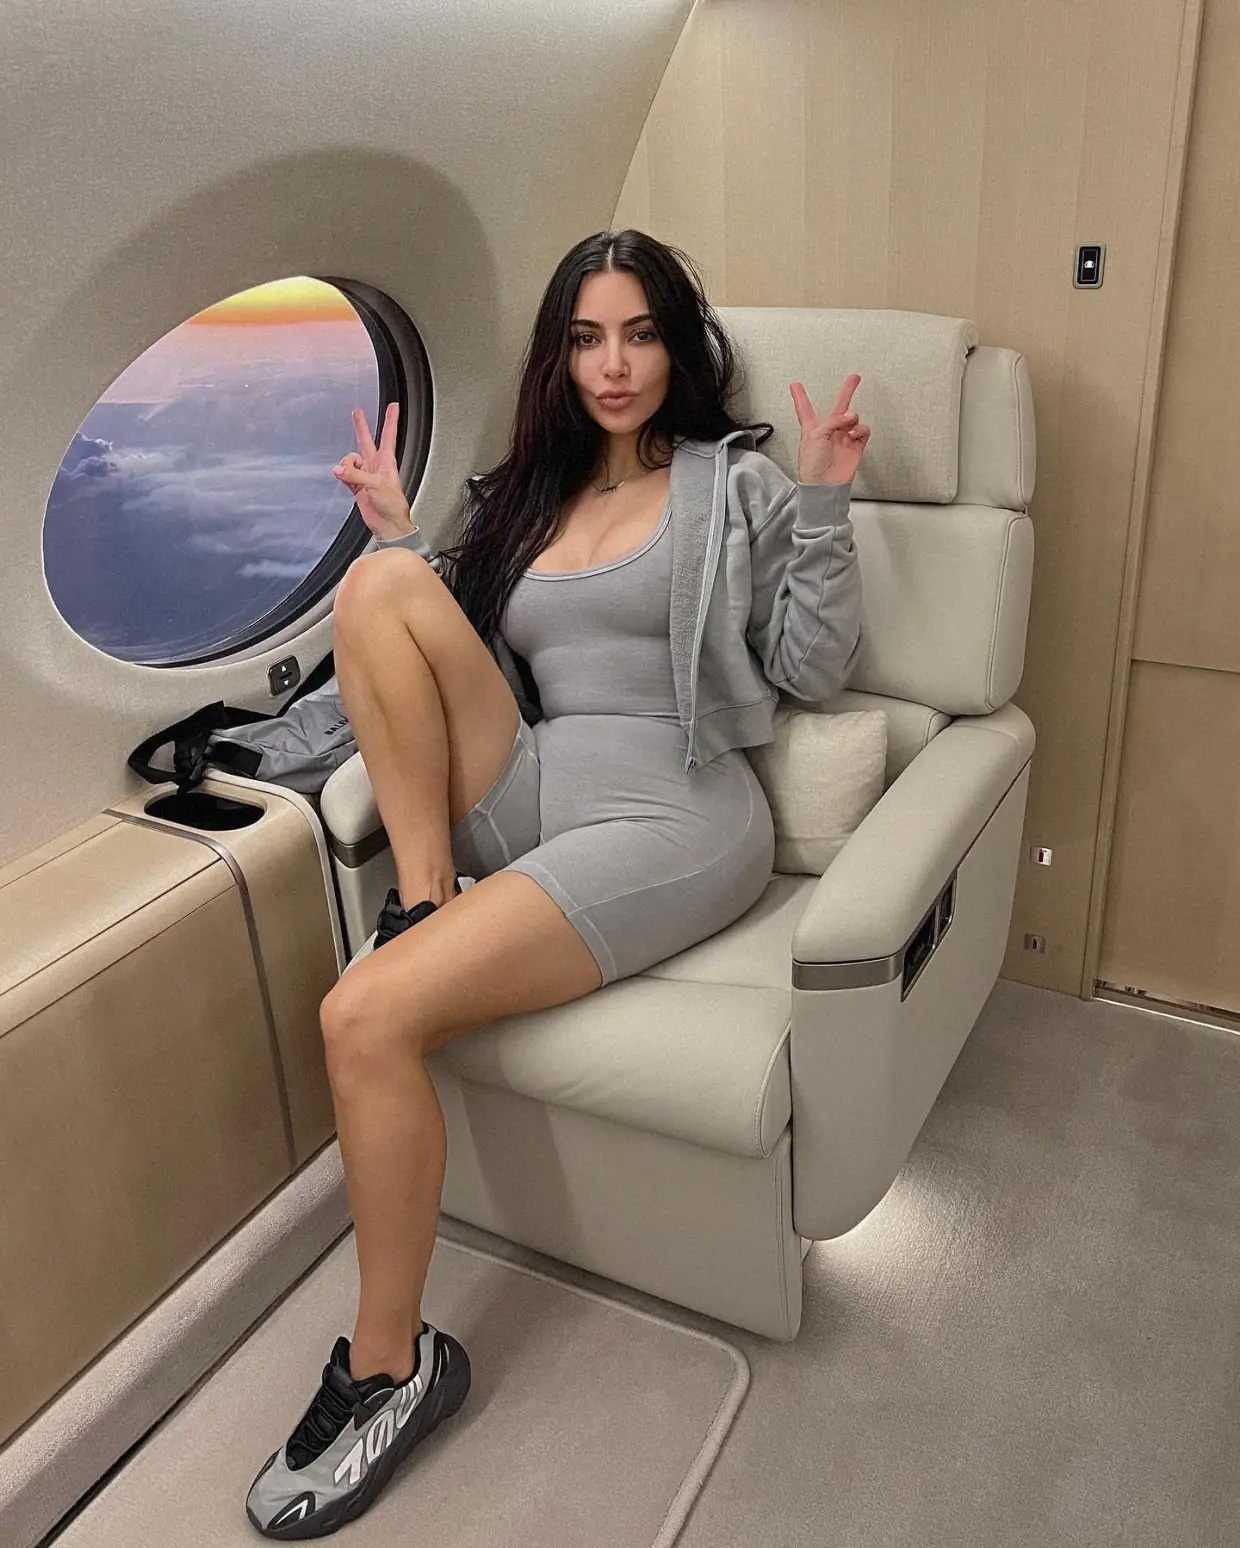 Kendall's sister Kim Kardashian owns a $150 million private jet